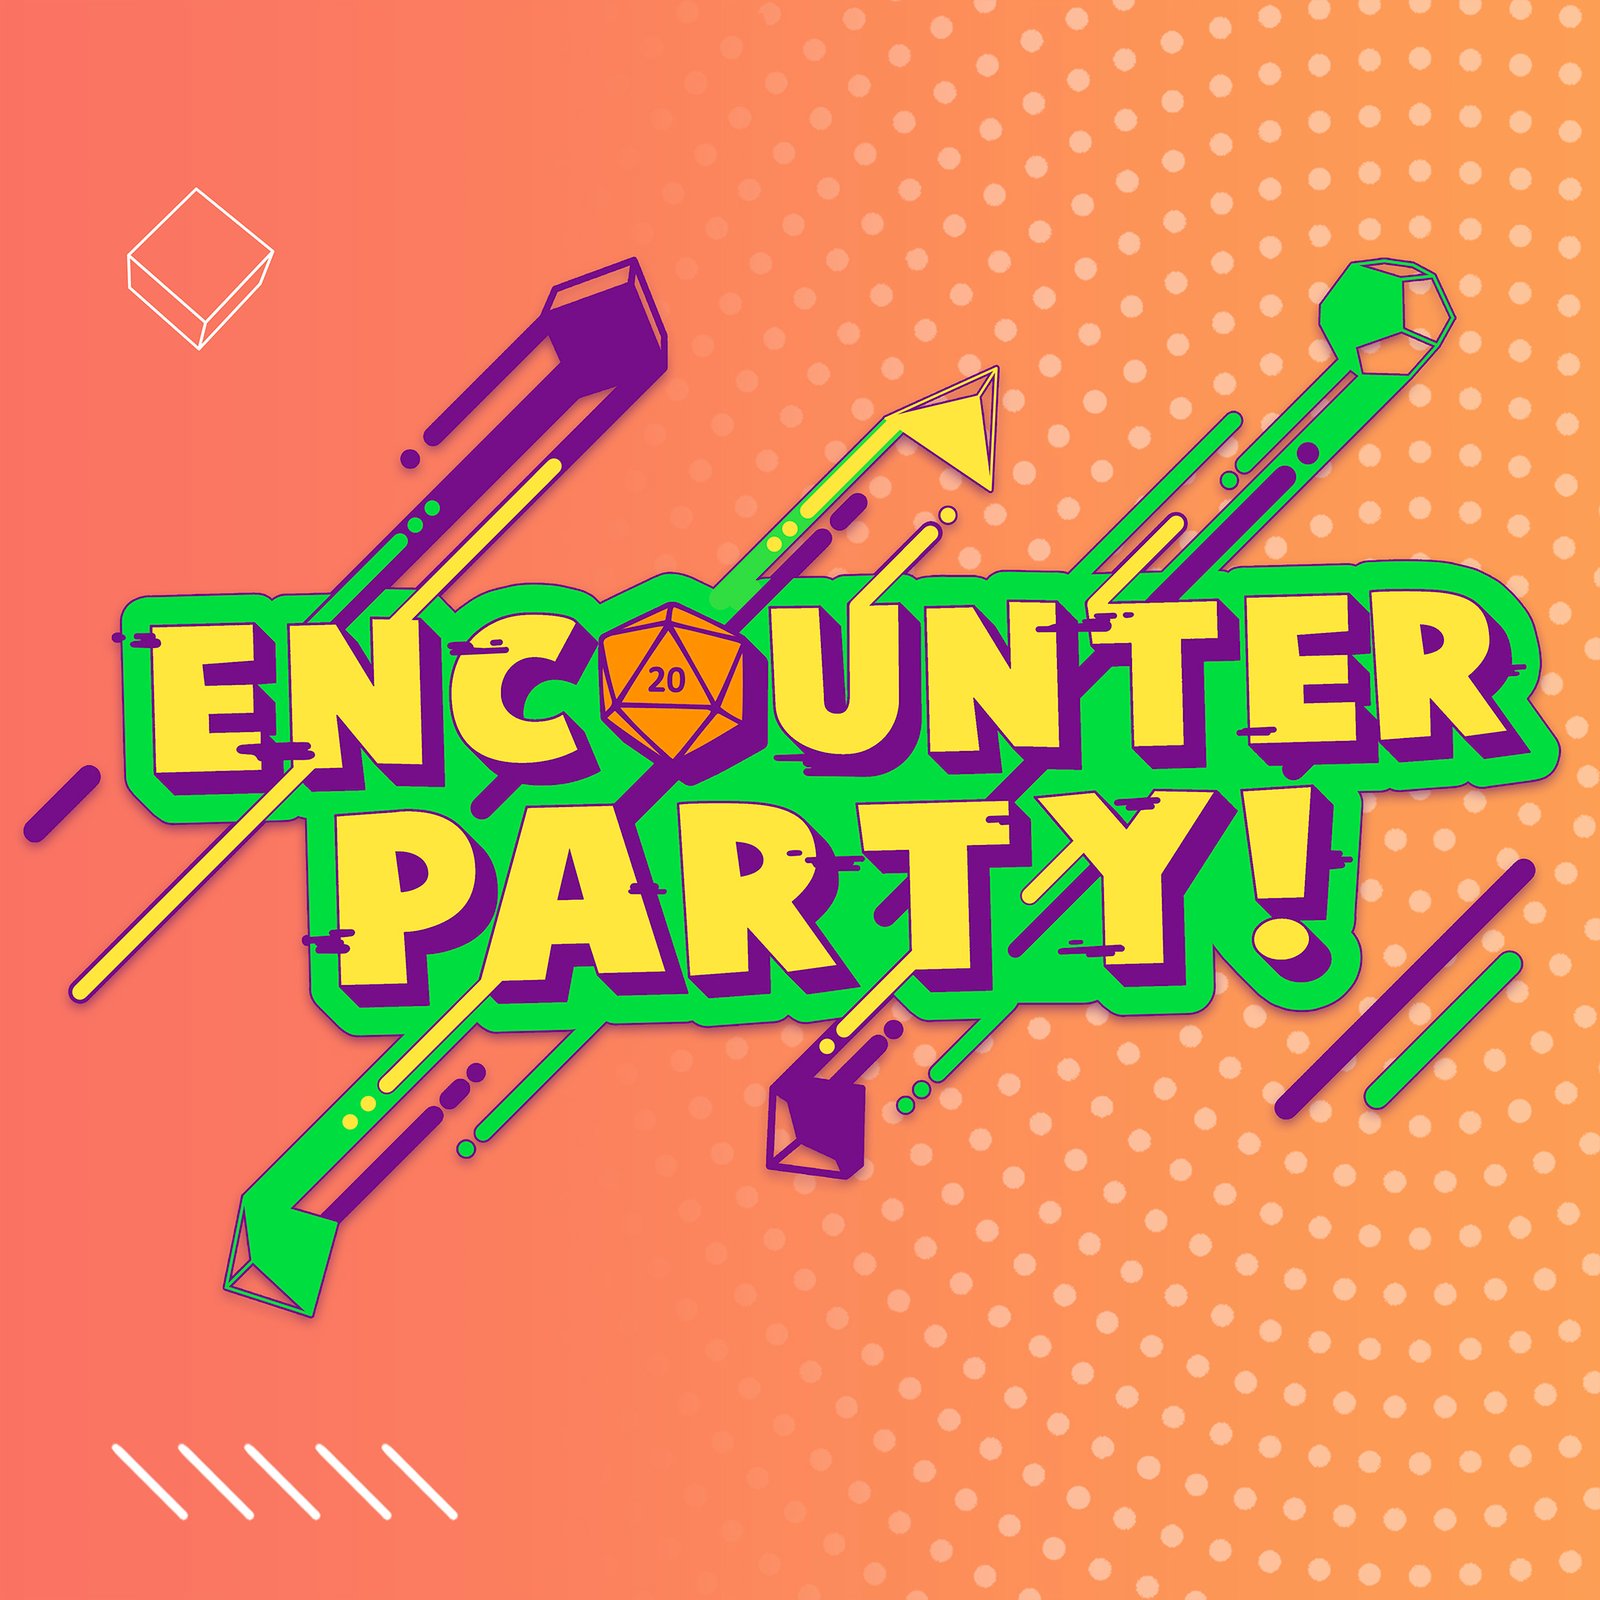 Encounter Party!